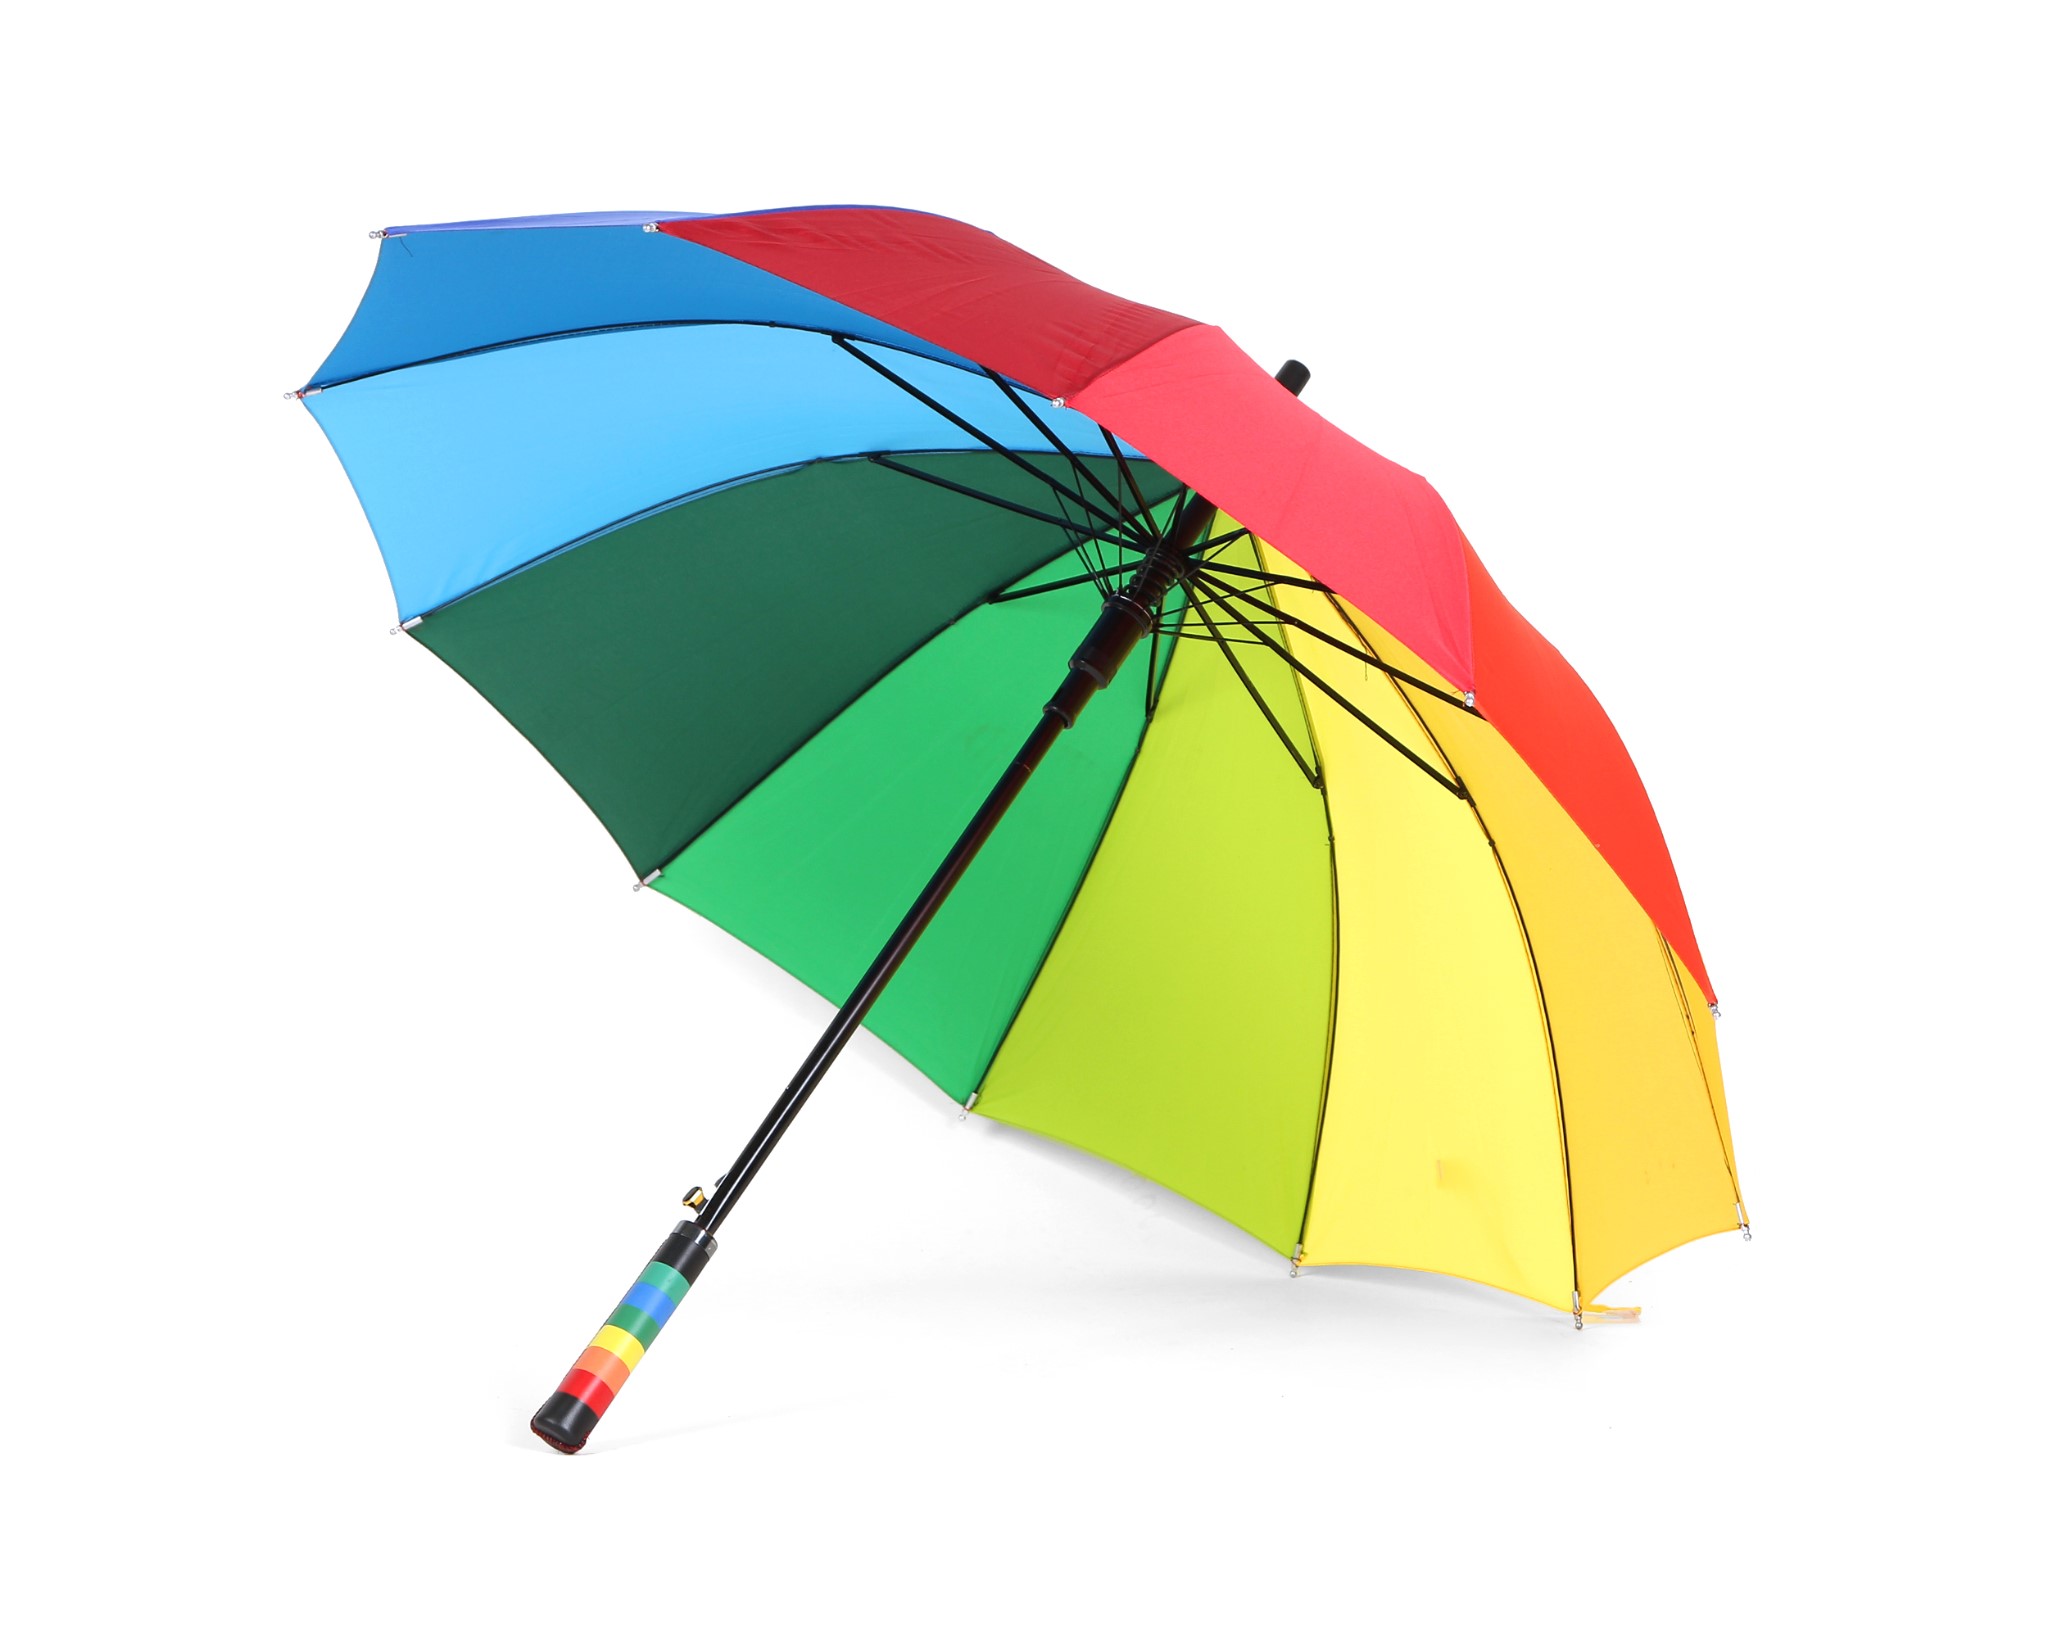 Image result for umbrella